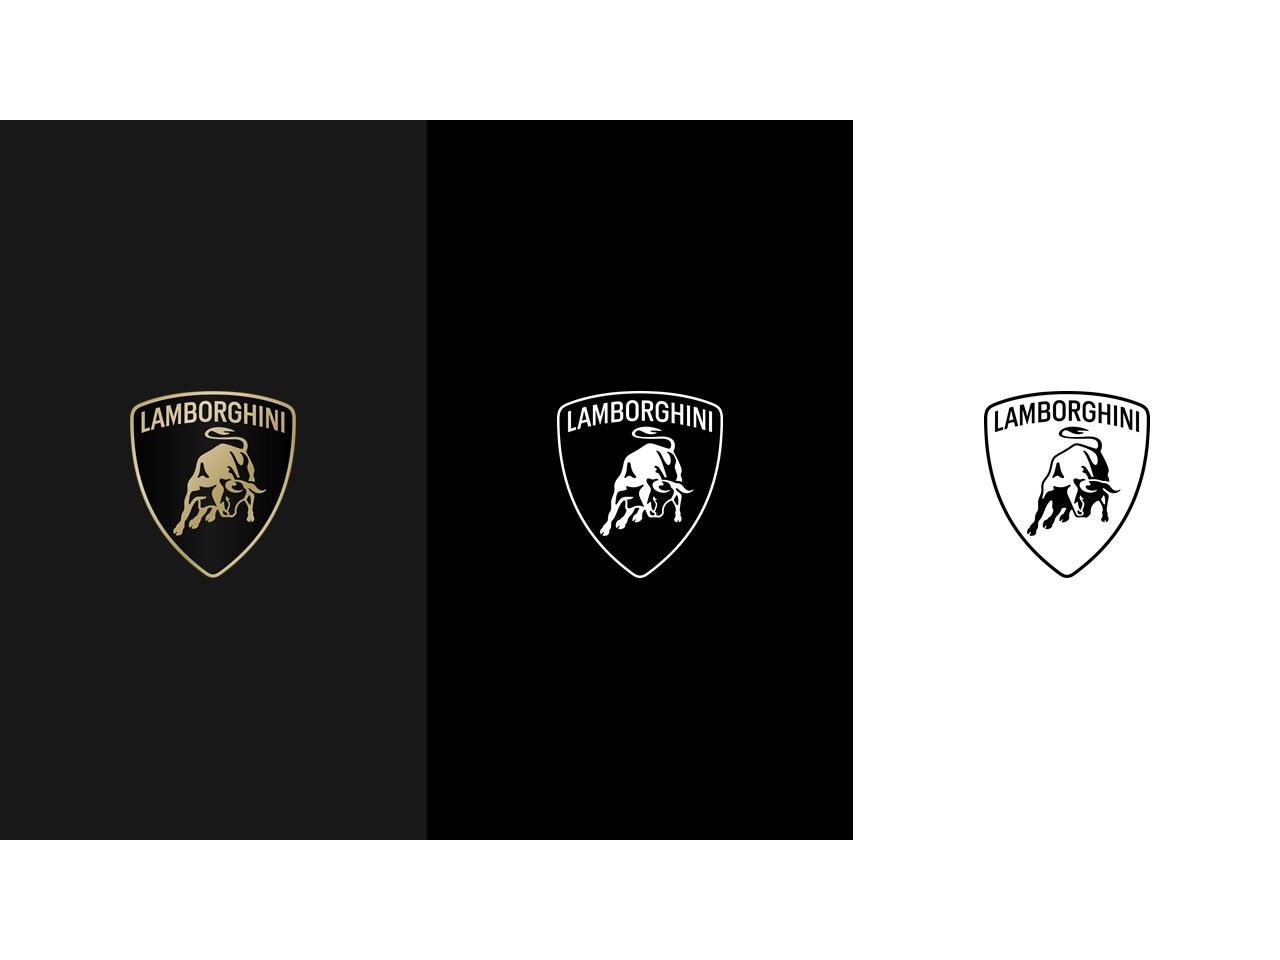 Lamborghini's new logo and colours.